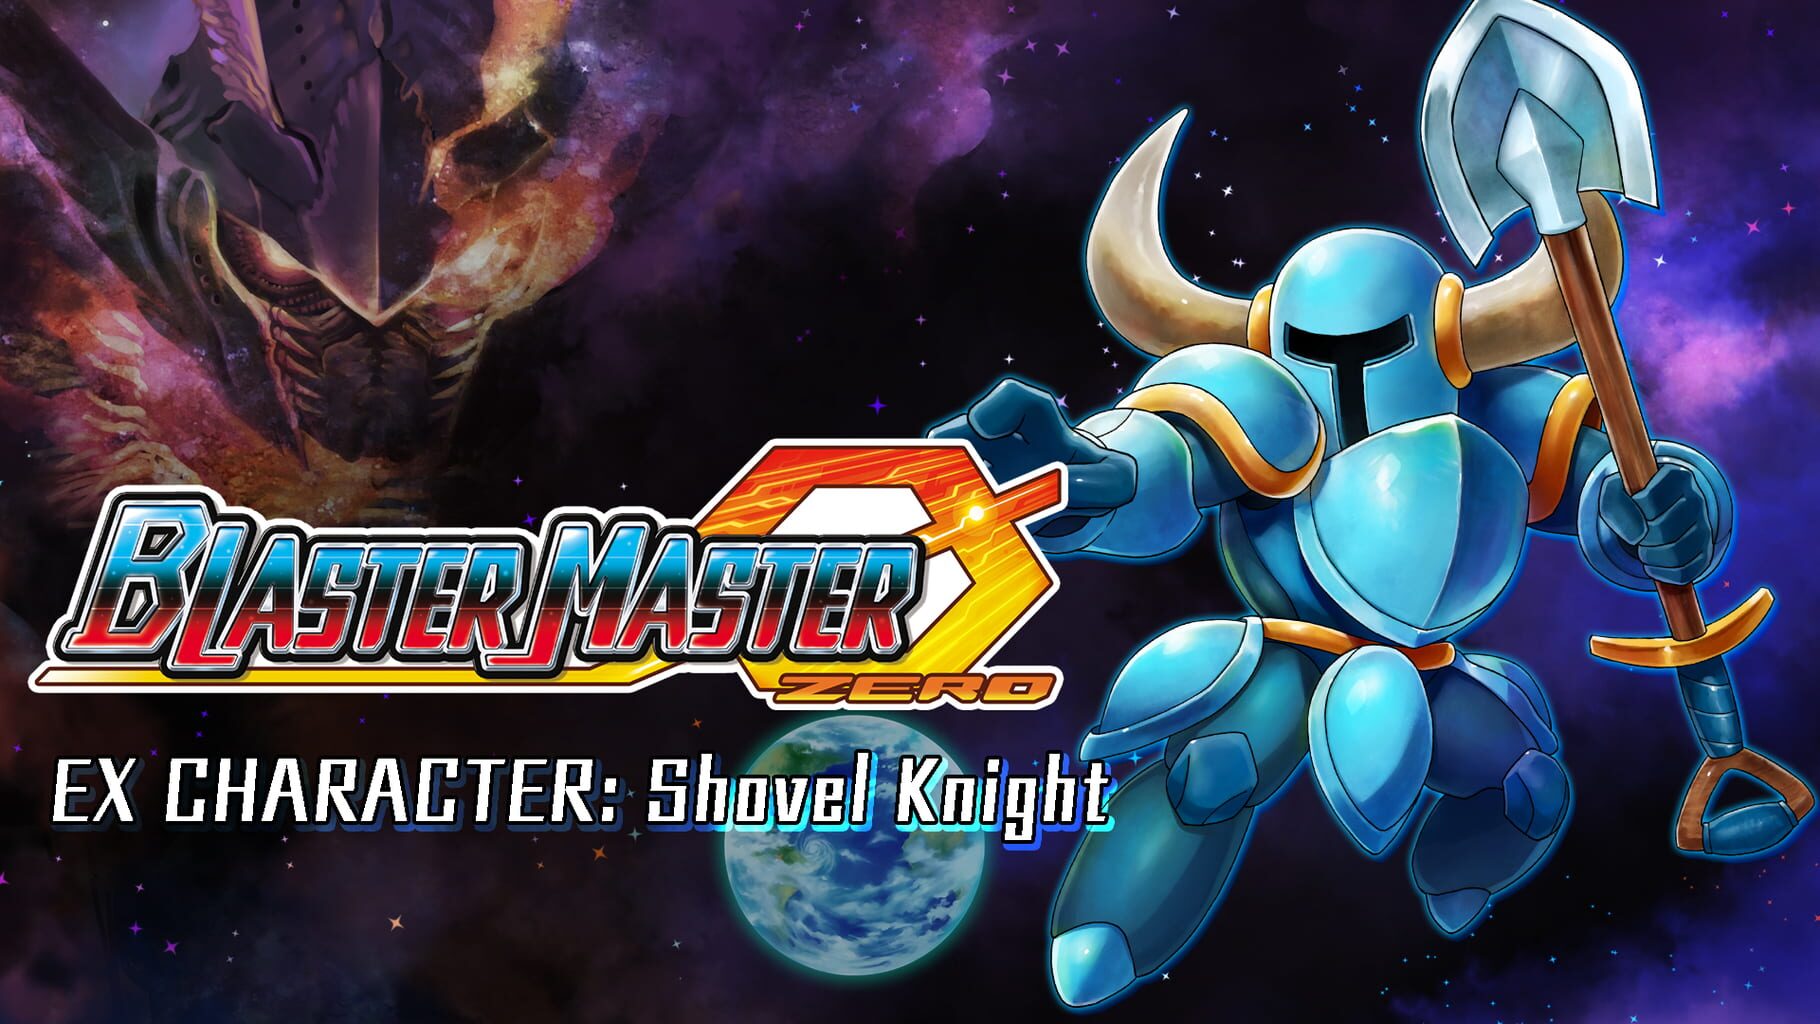 Arte - Blaster Master Zero: EX Character - Shovel Knight